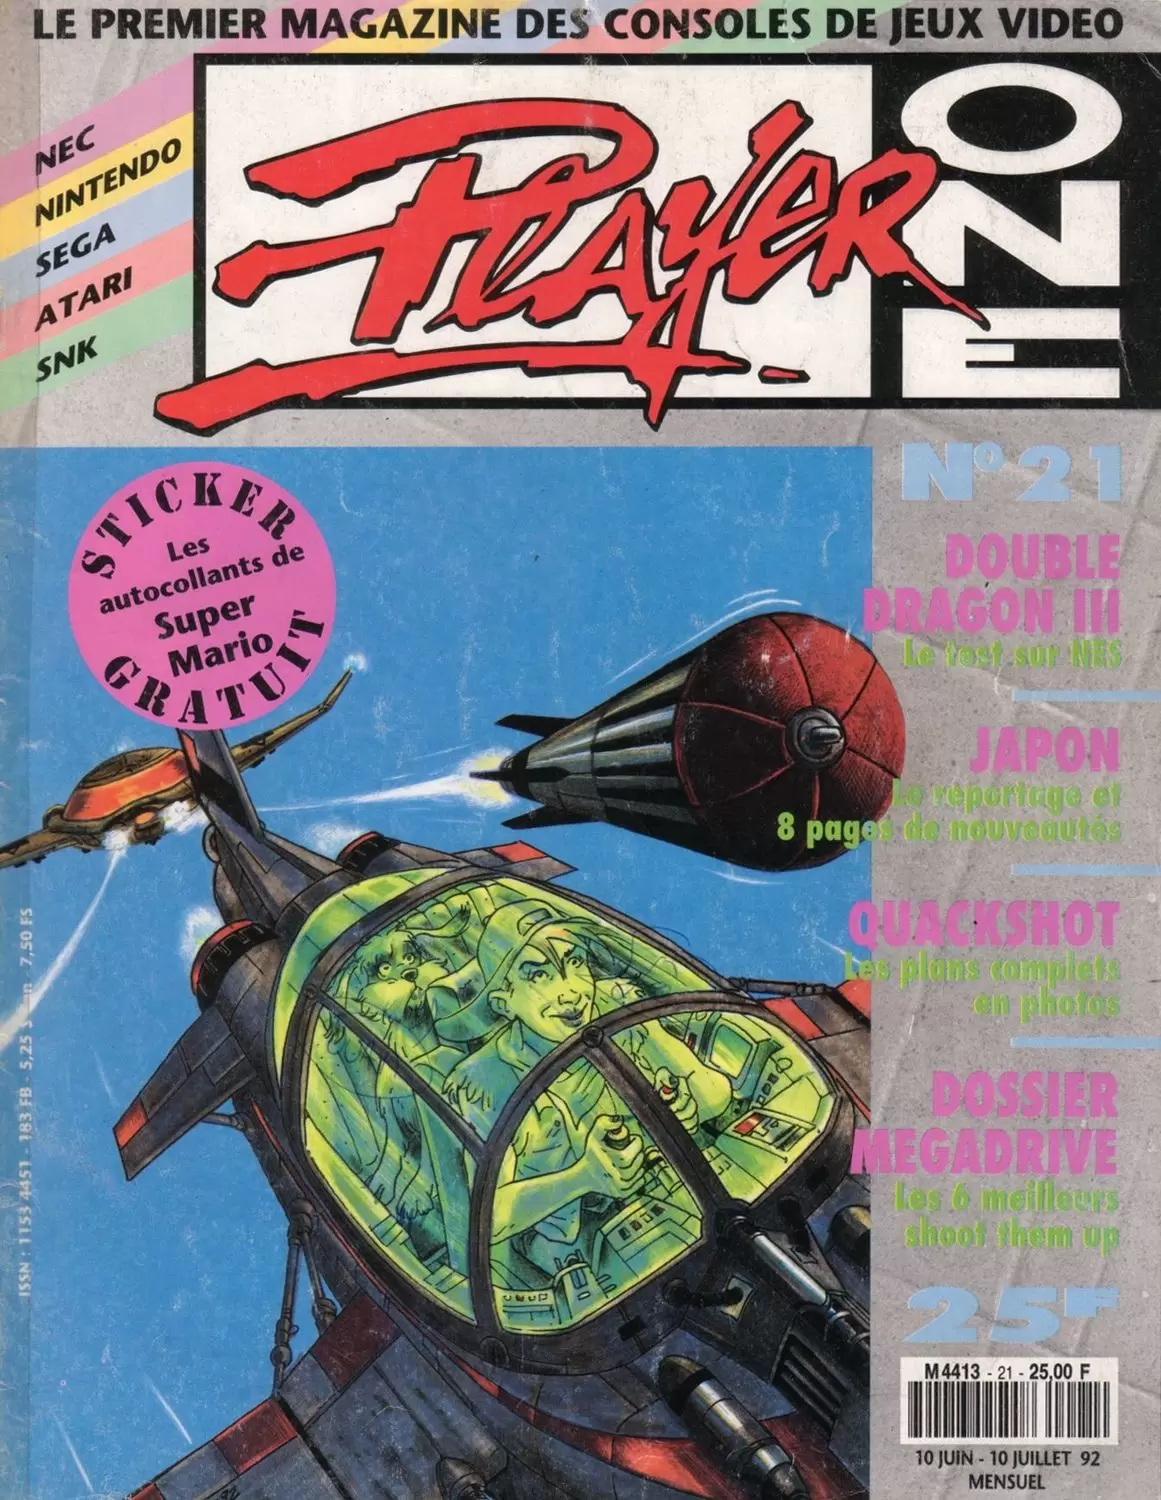 Player One - Magazine N°021